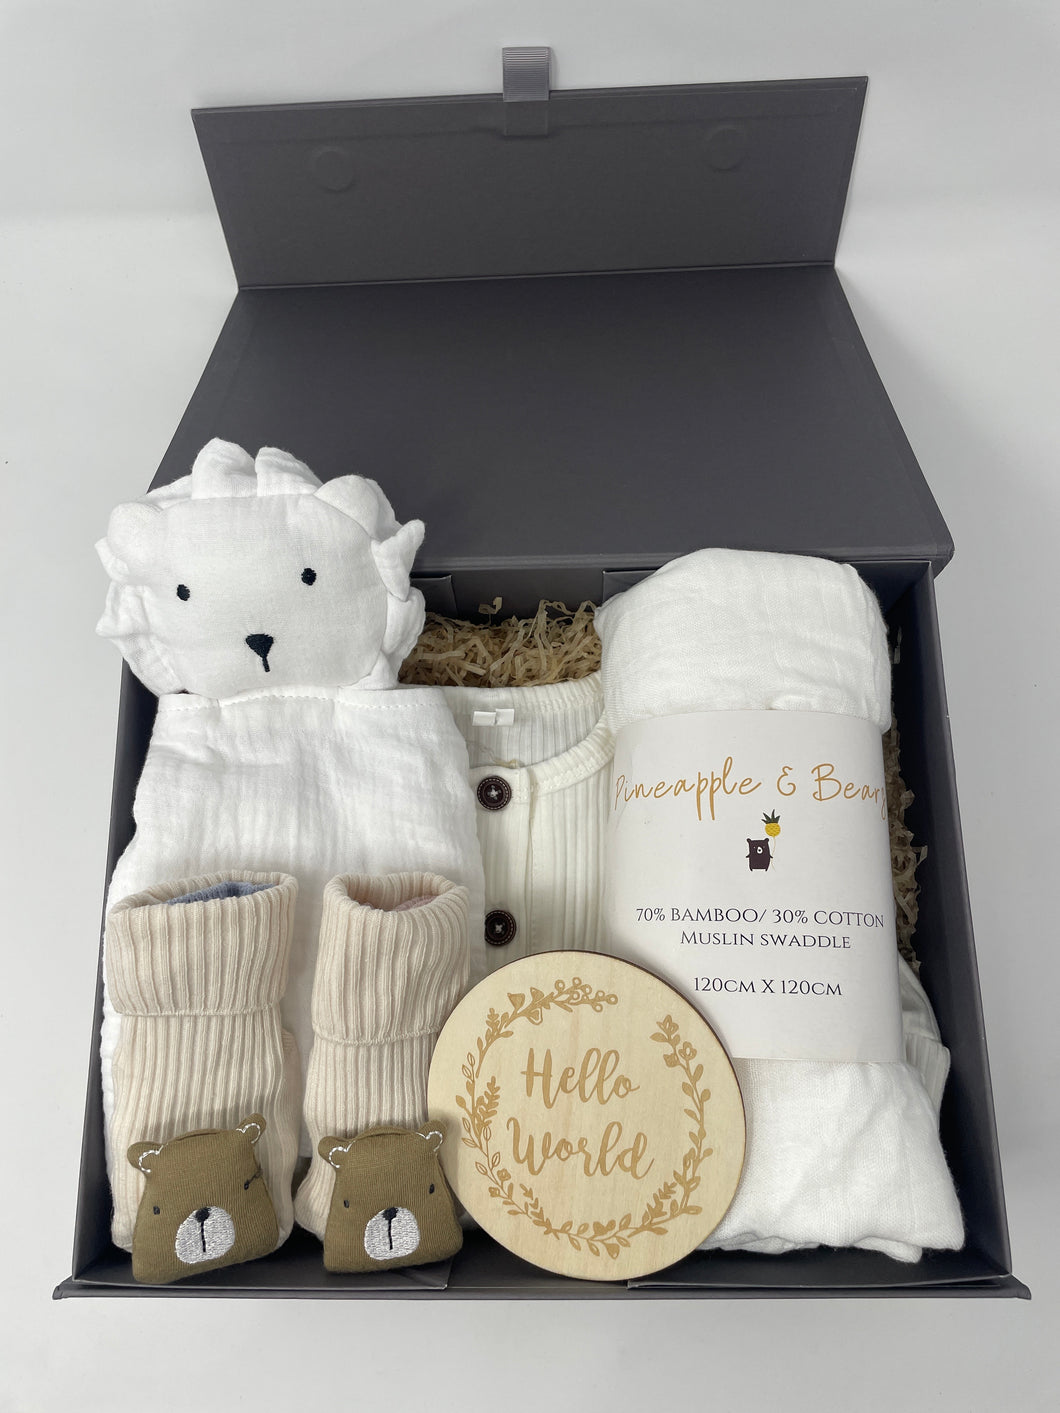 Deluxe baby gift box